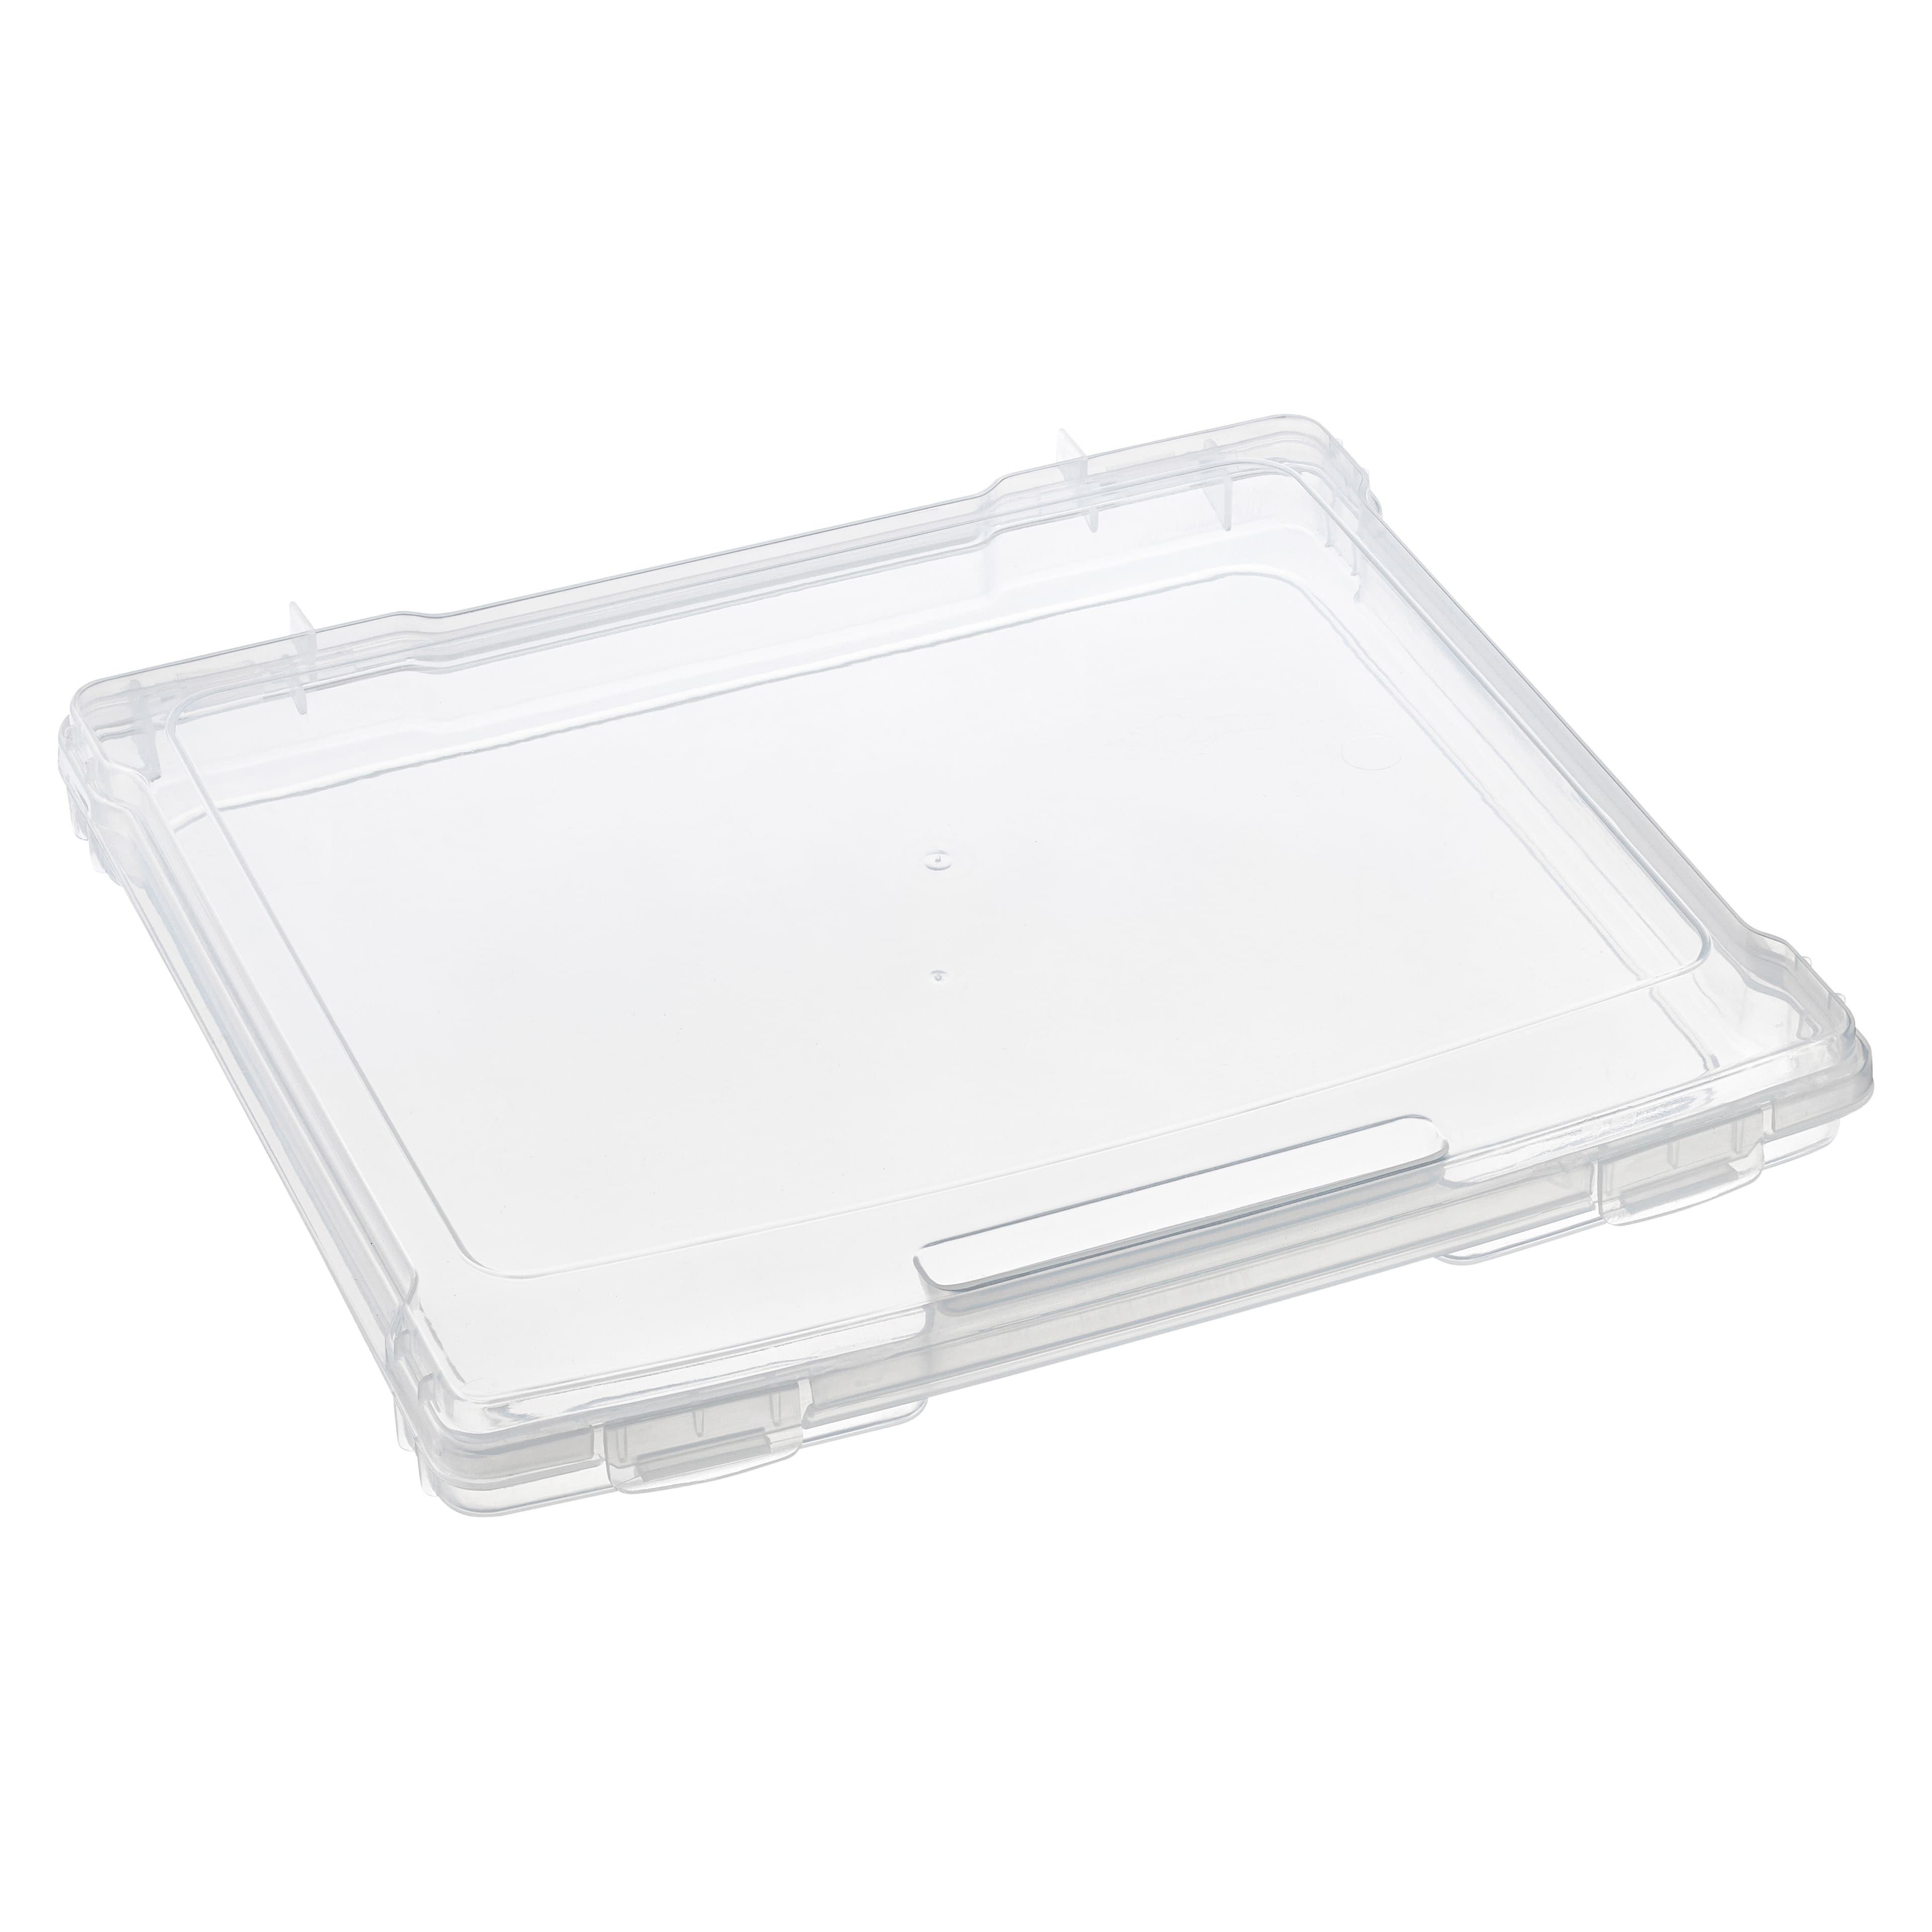  Nsmykhg Plastic Storage Box,12 Pack 10 Grids Small